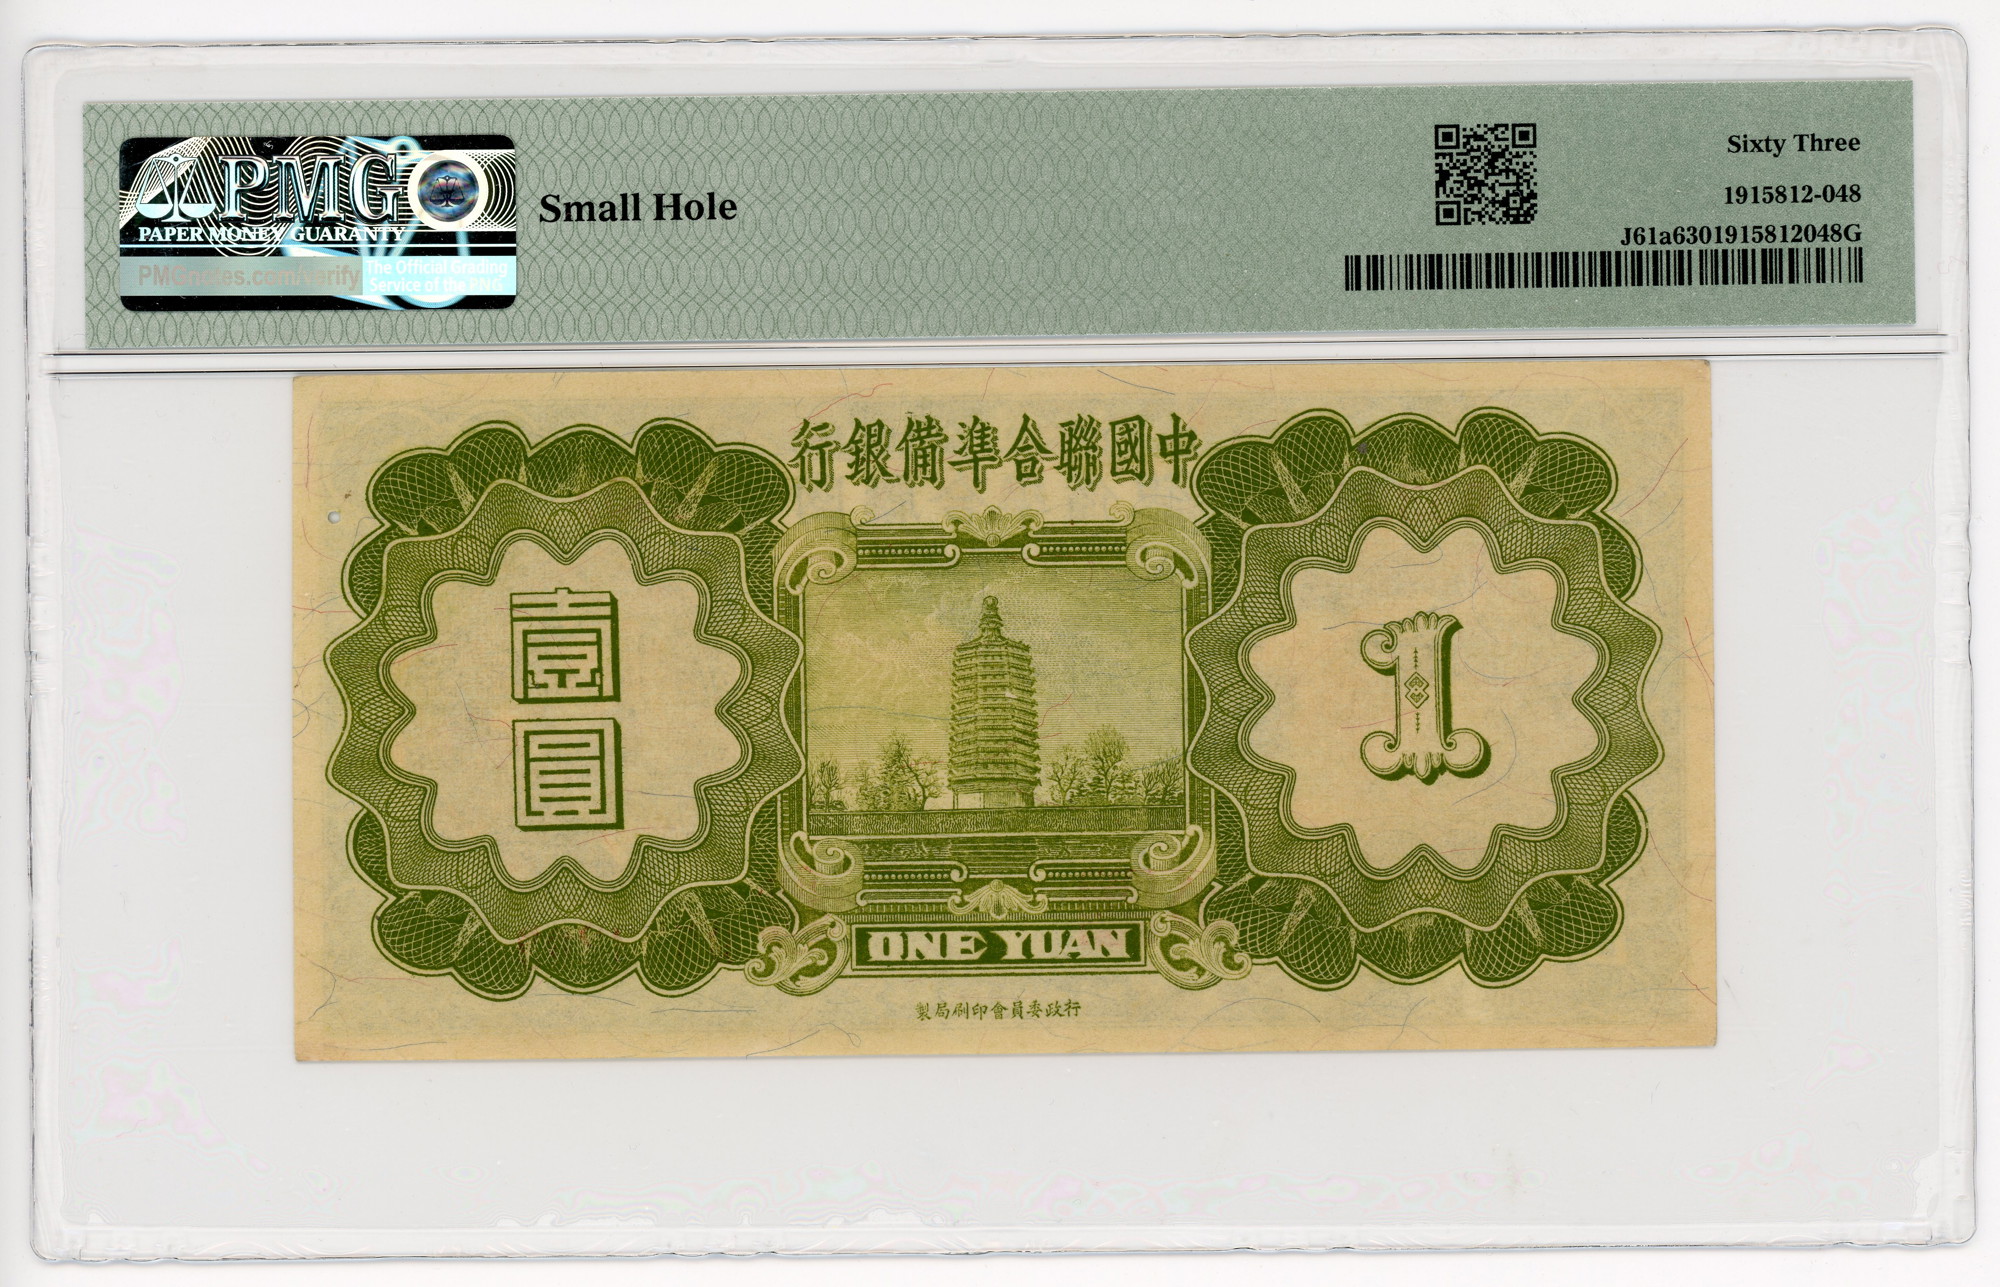 China 1 Yuan 1938 PMG 63 Choice Uncirculated | Katz Auction